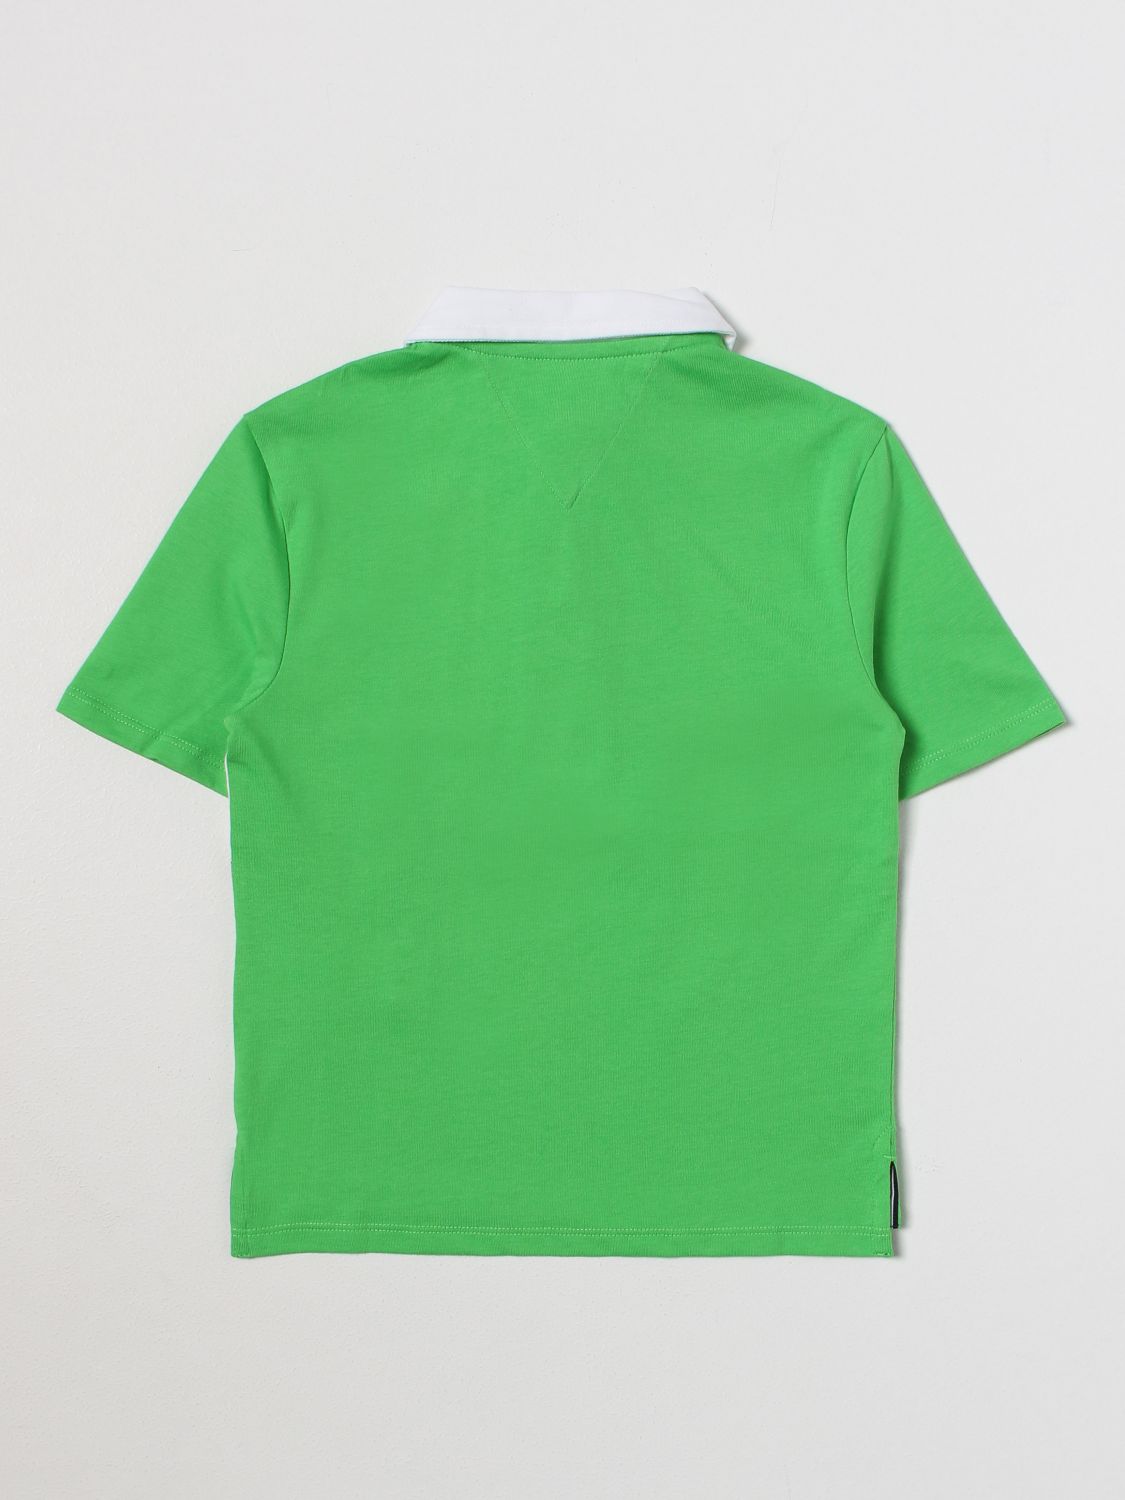 TOMMY HILFIGER: t-shirt for boys - Green | Tommy Hilfiger t-shirt ...